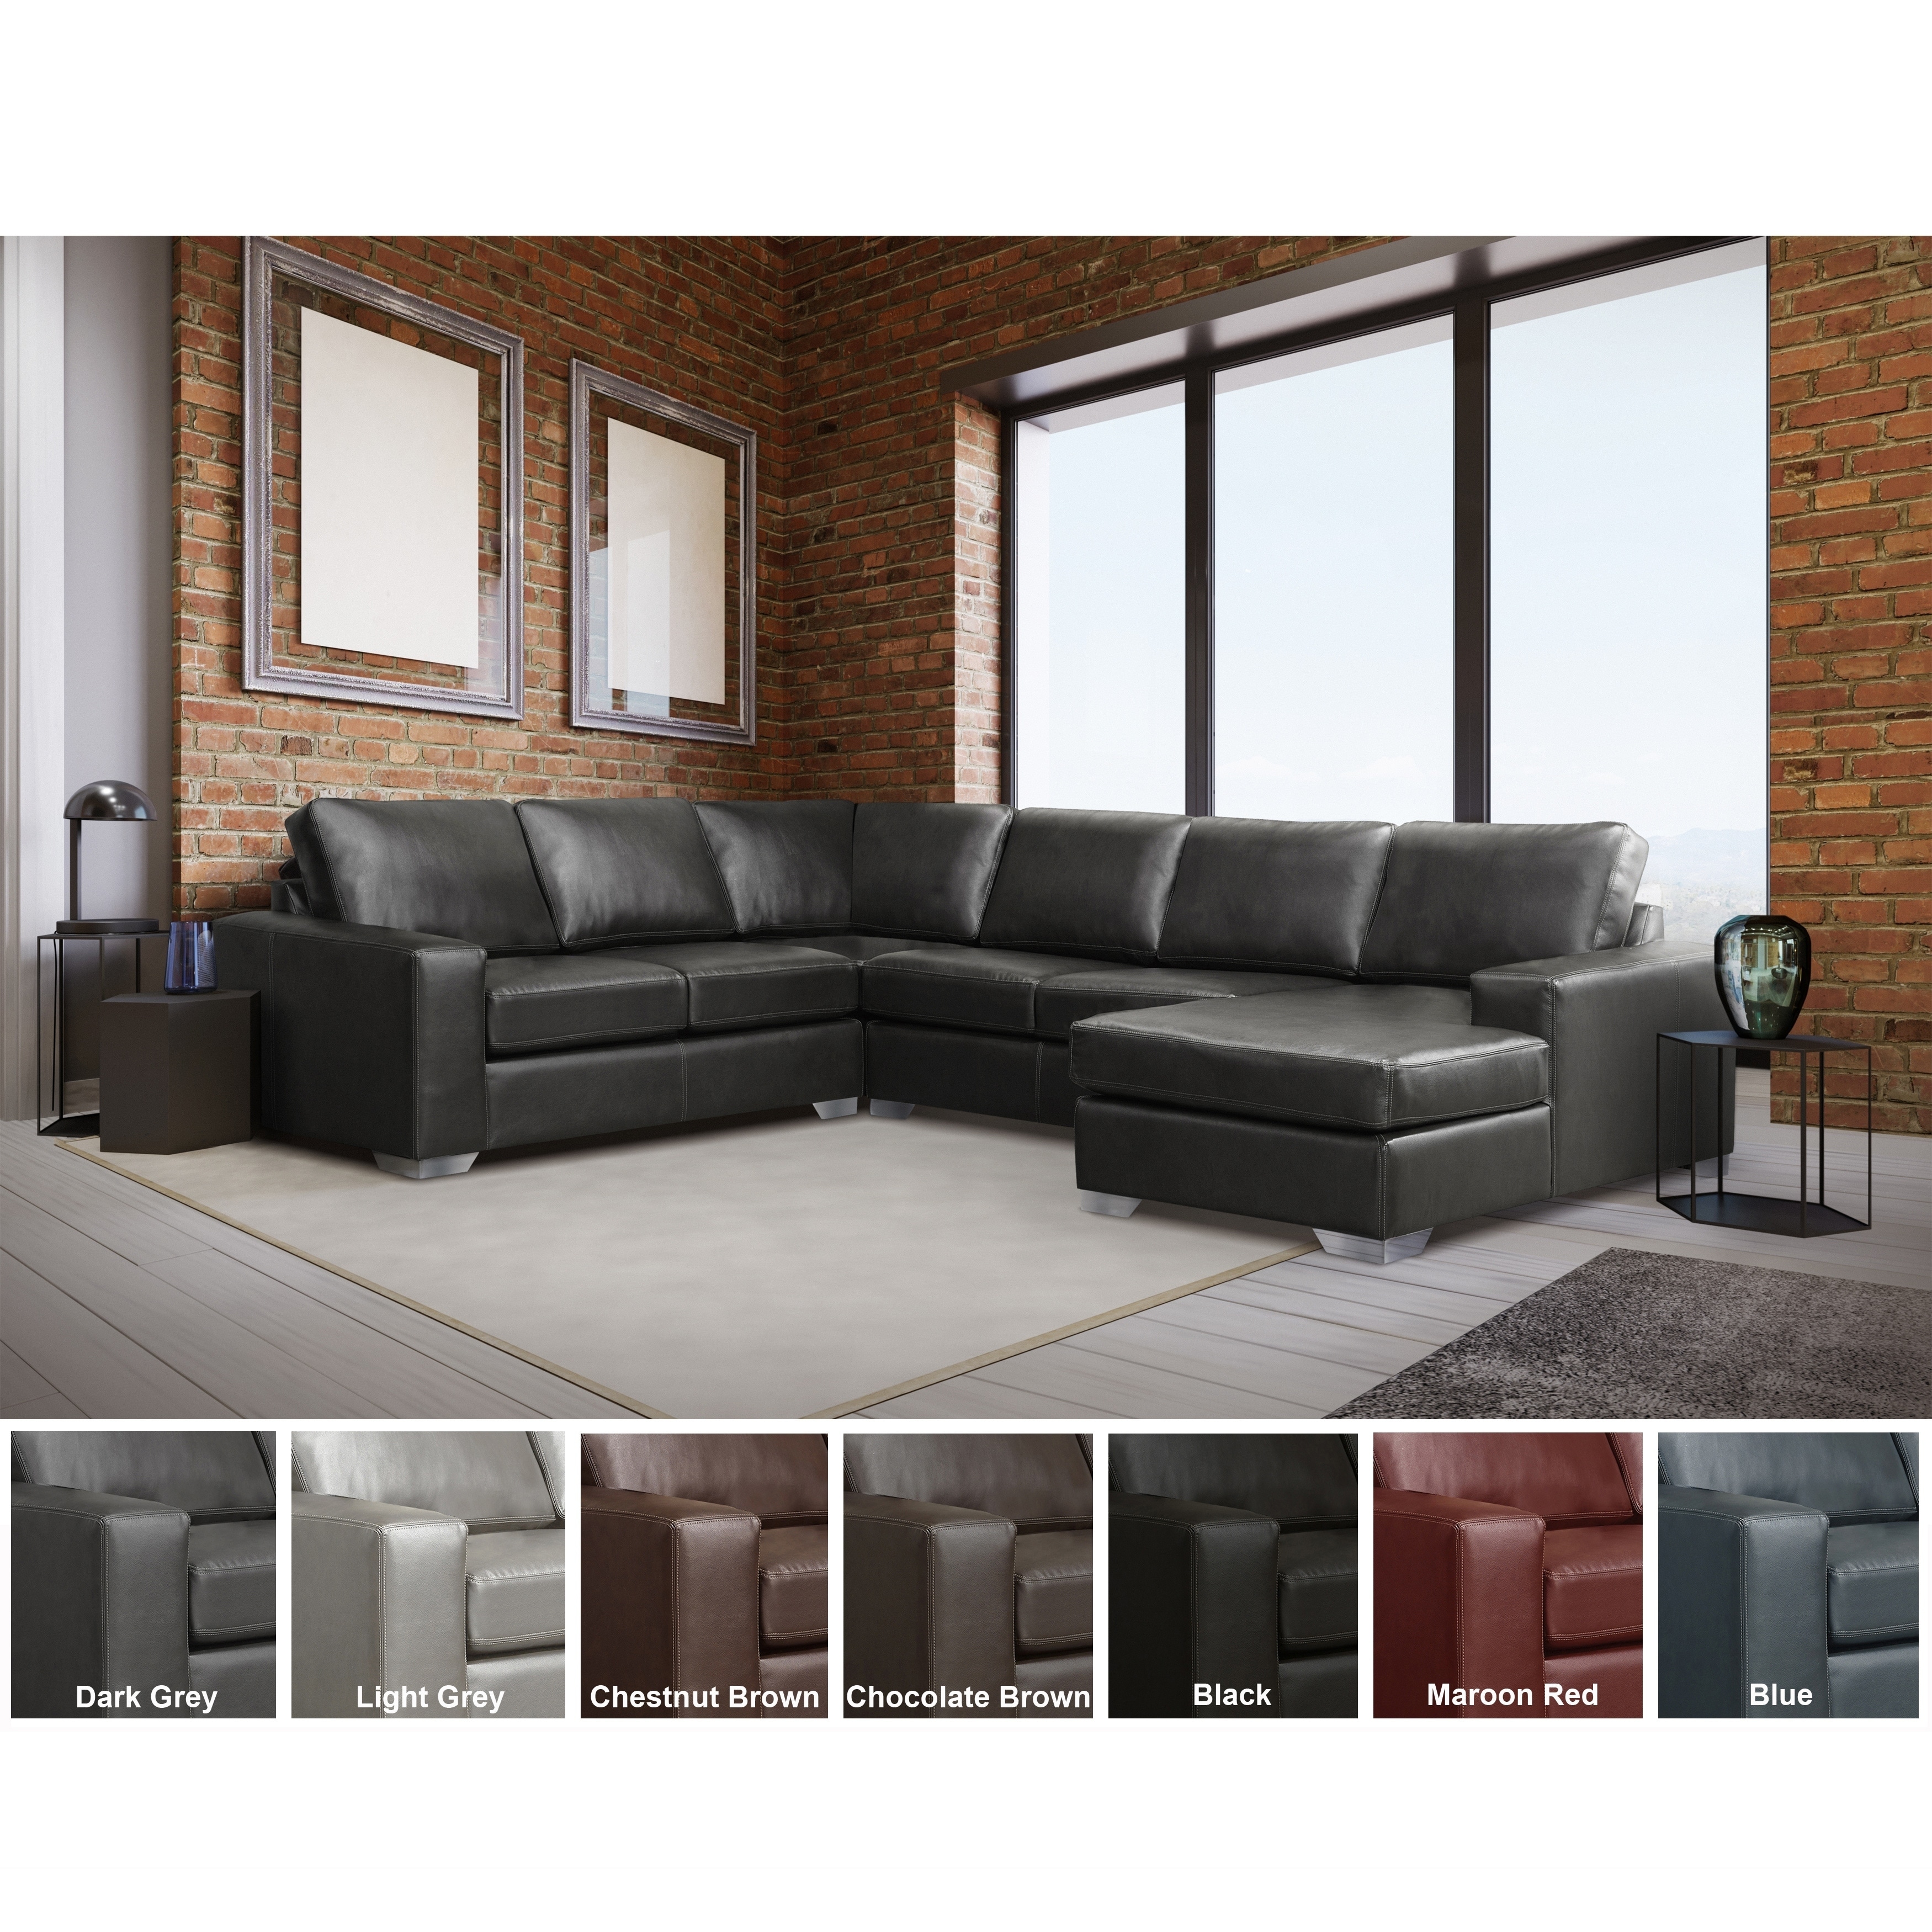 Mitchell Modern Premium Top Grain Italian Leather Sectional Sofa Overstock 27617560